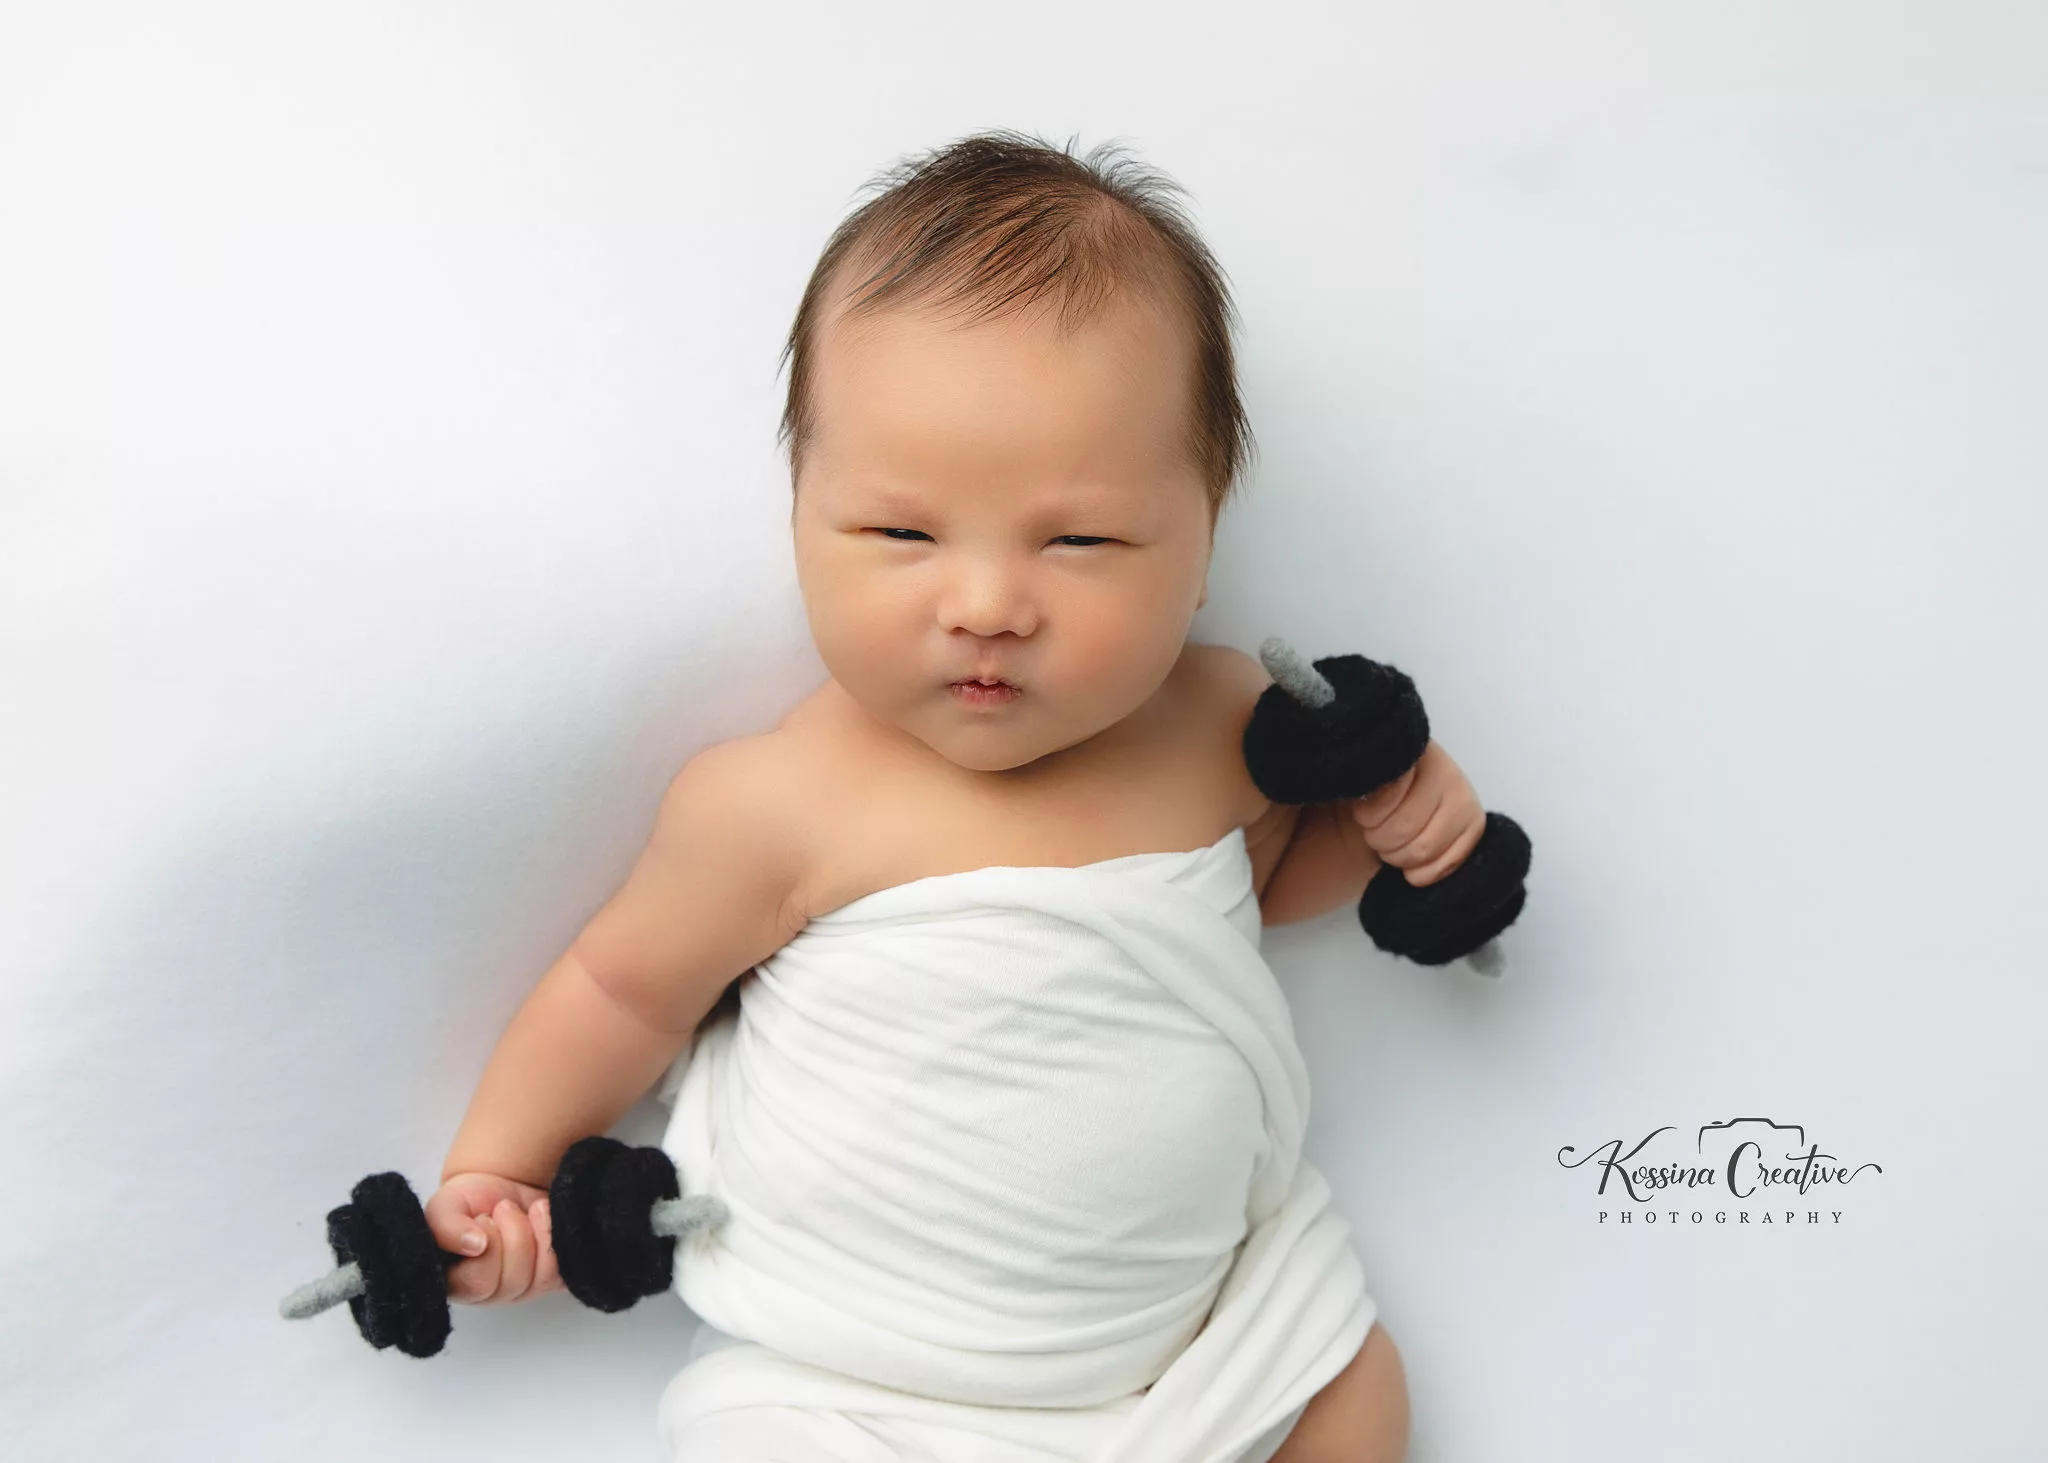 Orlando new born photography baby photo studio baby lifting weights